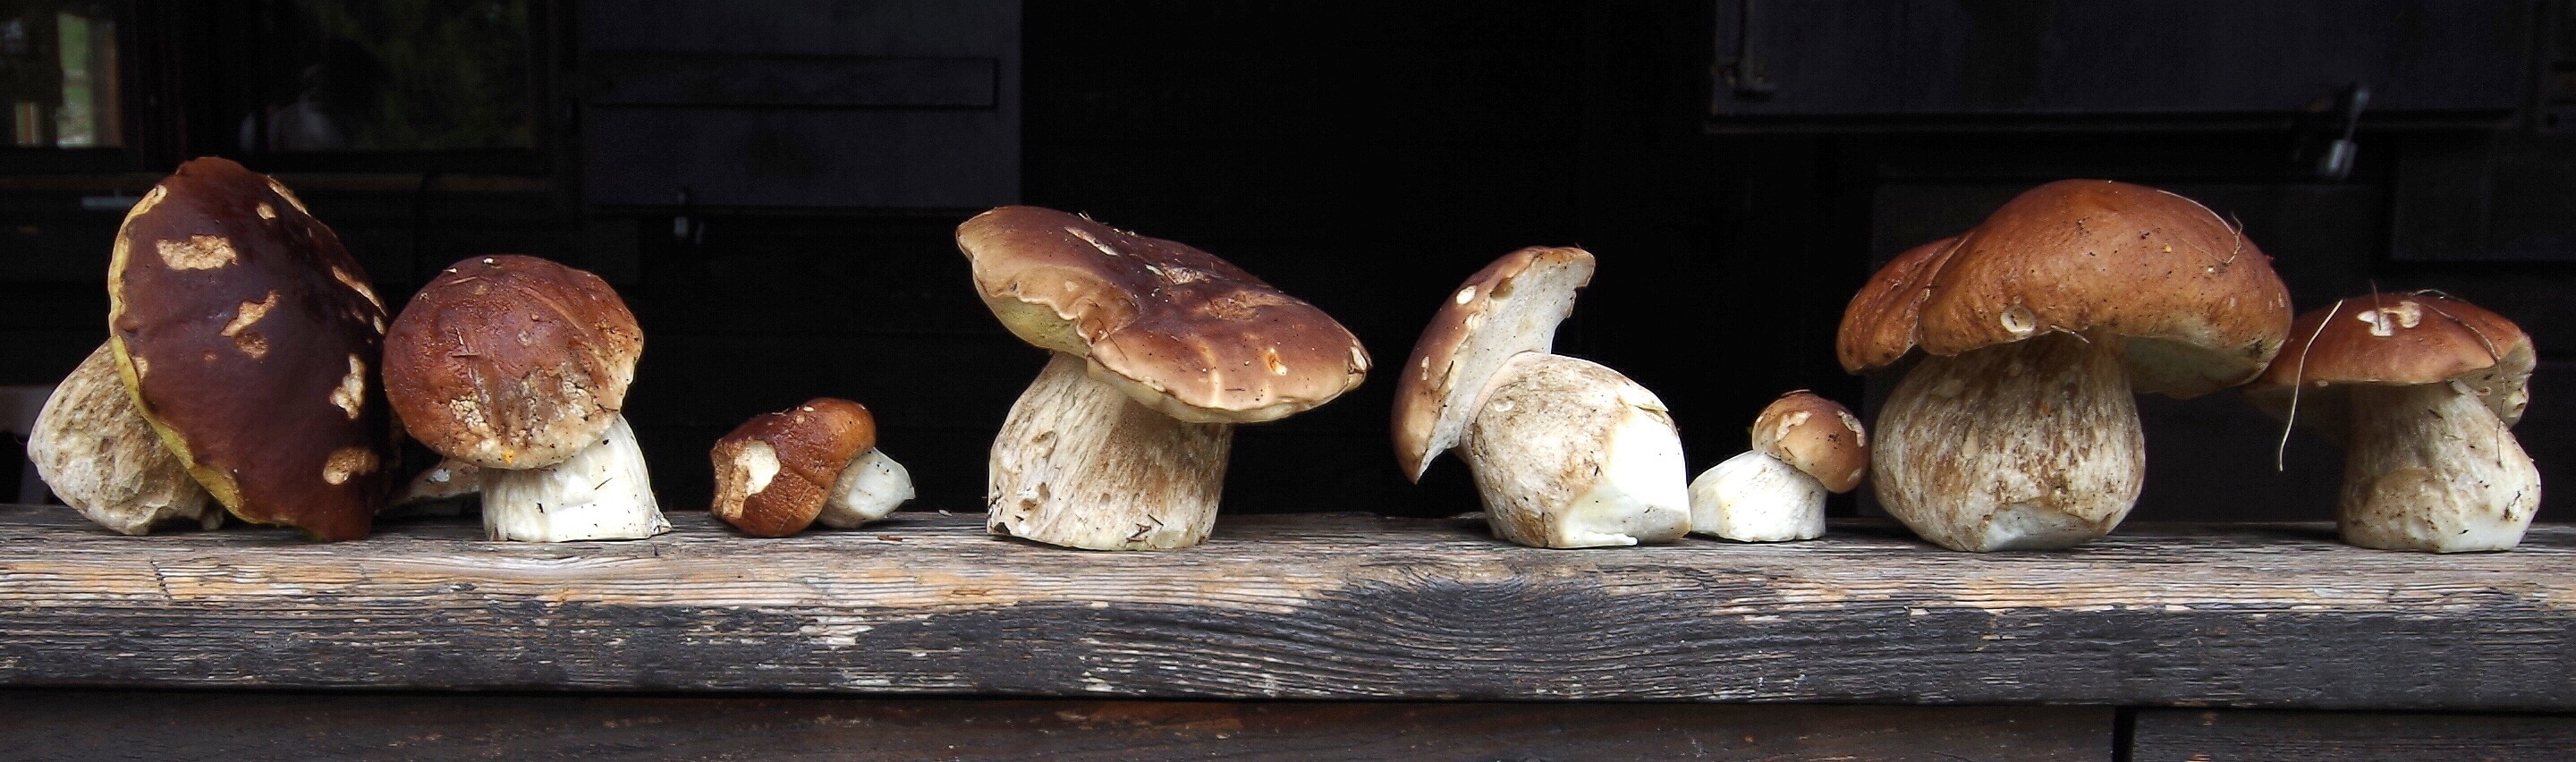 mushroom lot